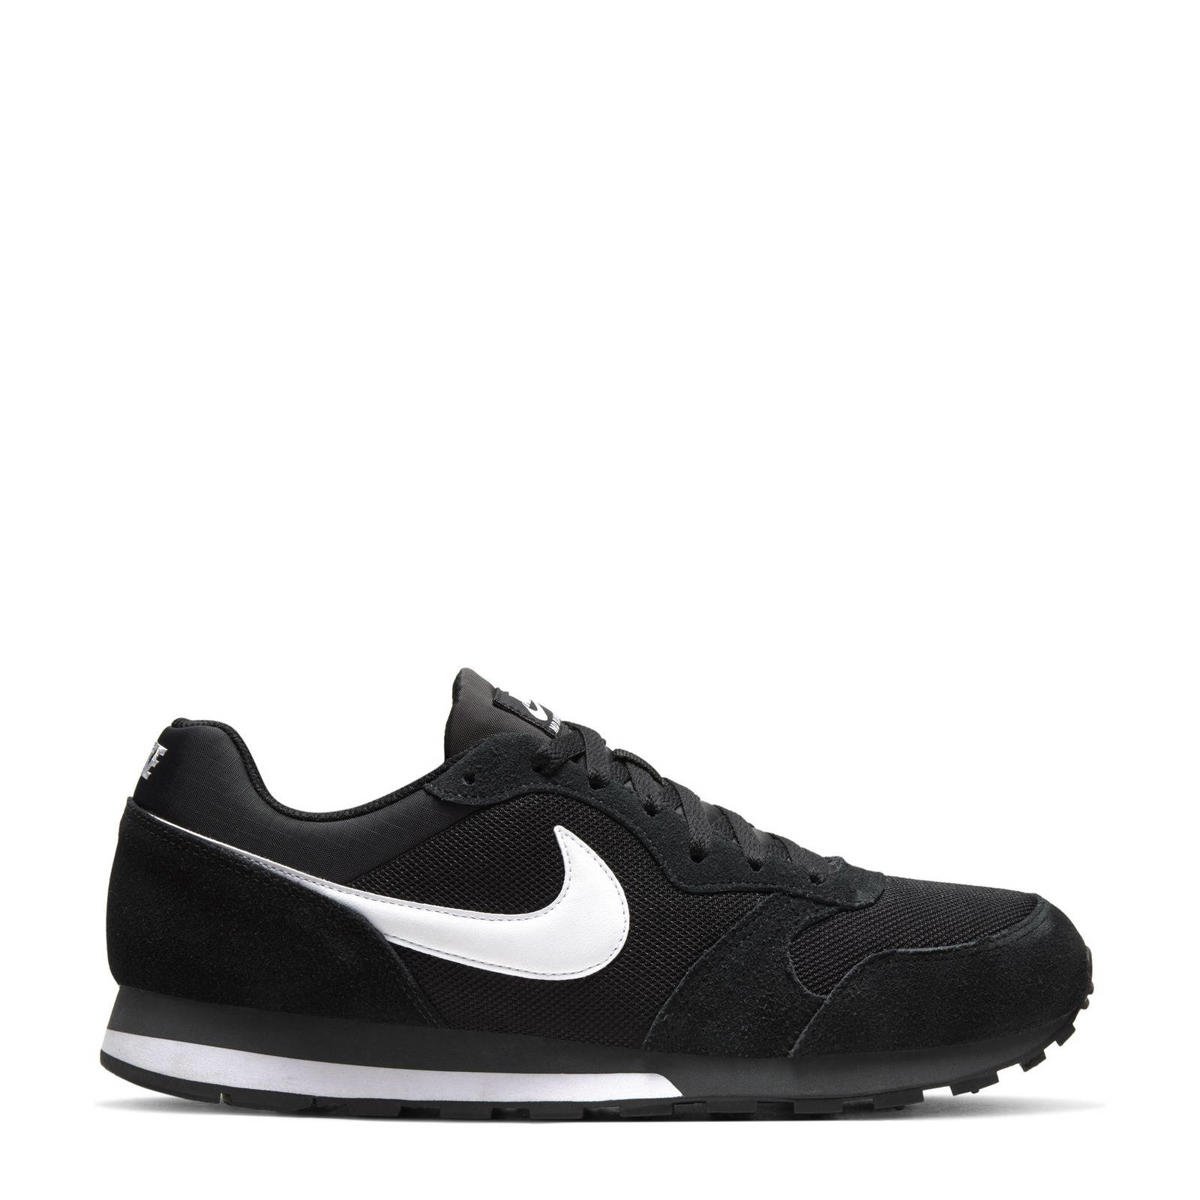 ventilator pin Ruim Nike MD Runner 2 sneakers zwart/wit/antraciet | wehkamp